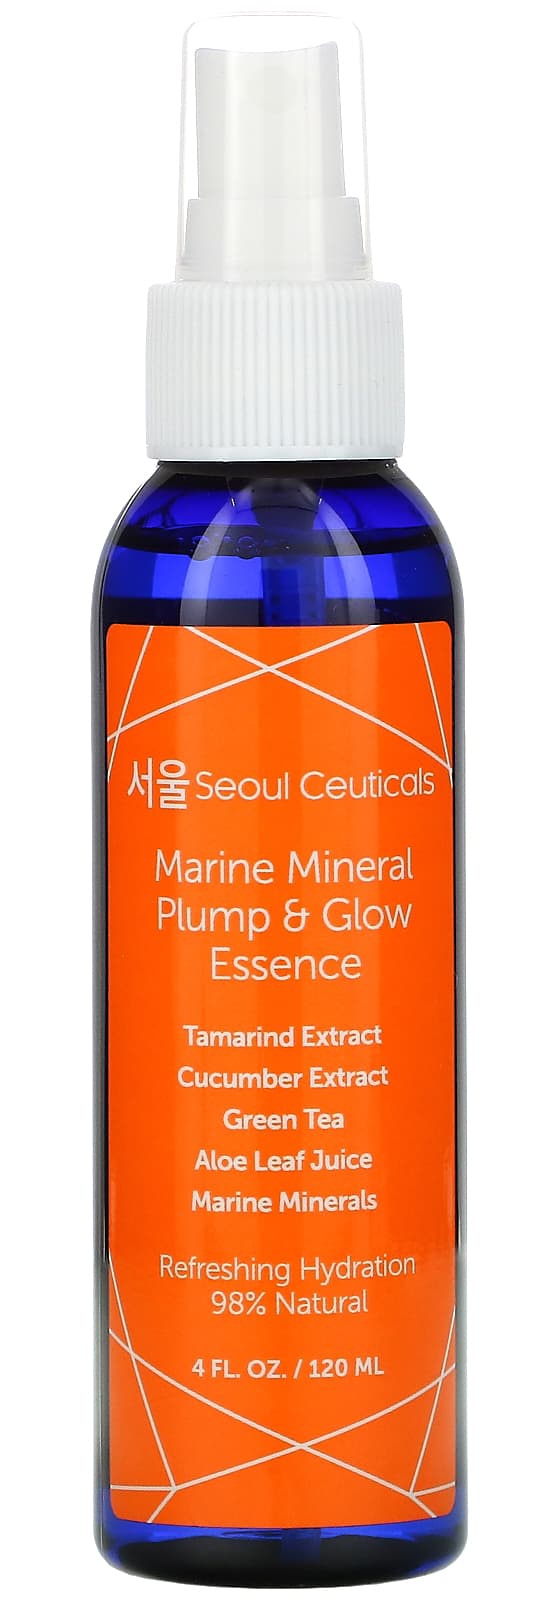 Seoul Ceuticals Marine Mineral Plump & Glow Essence